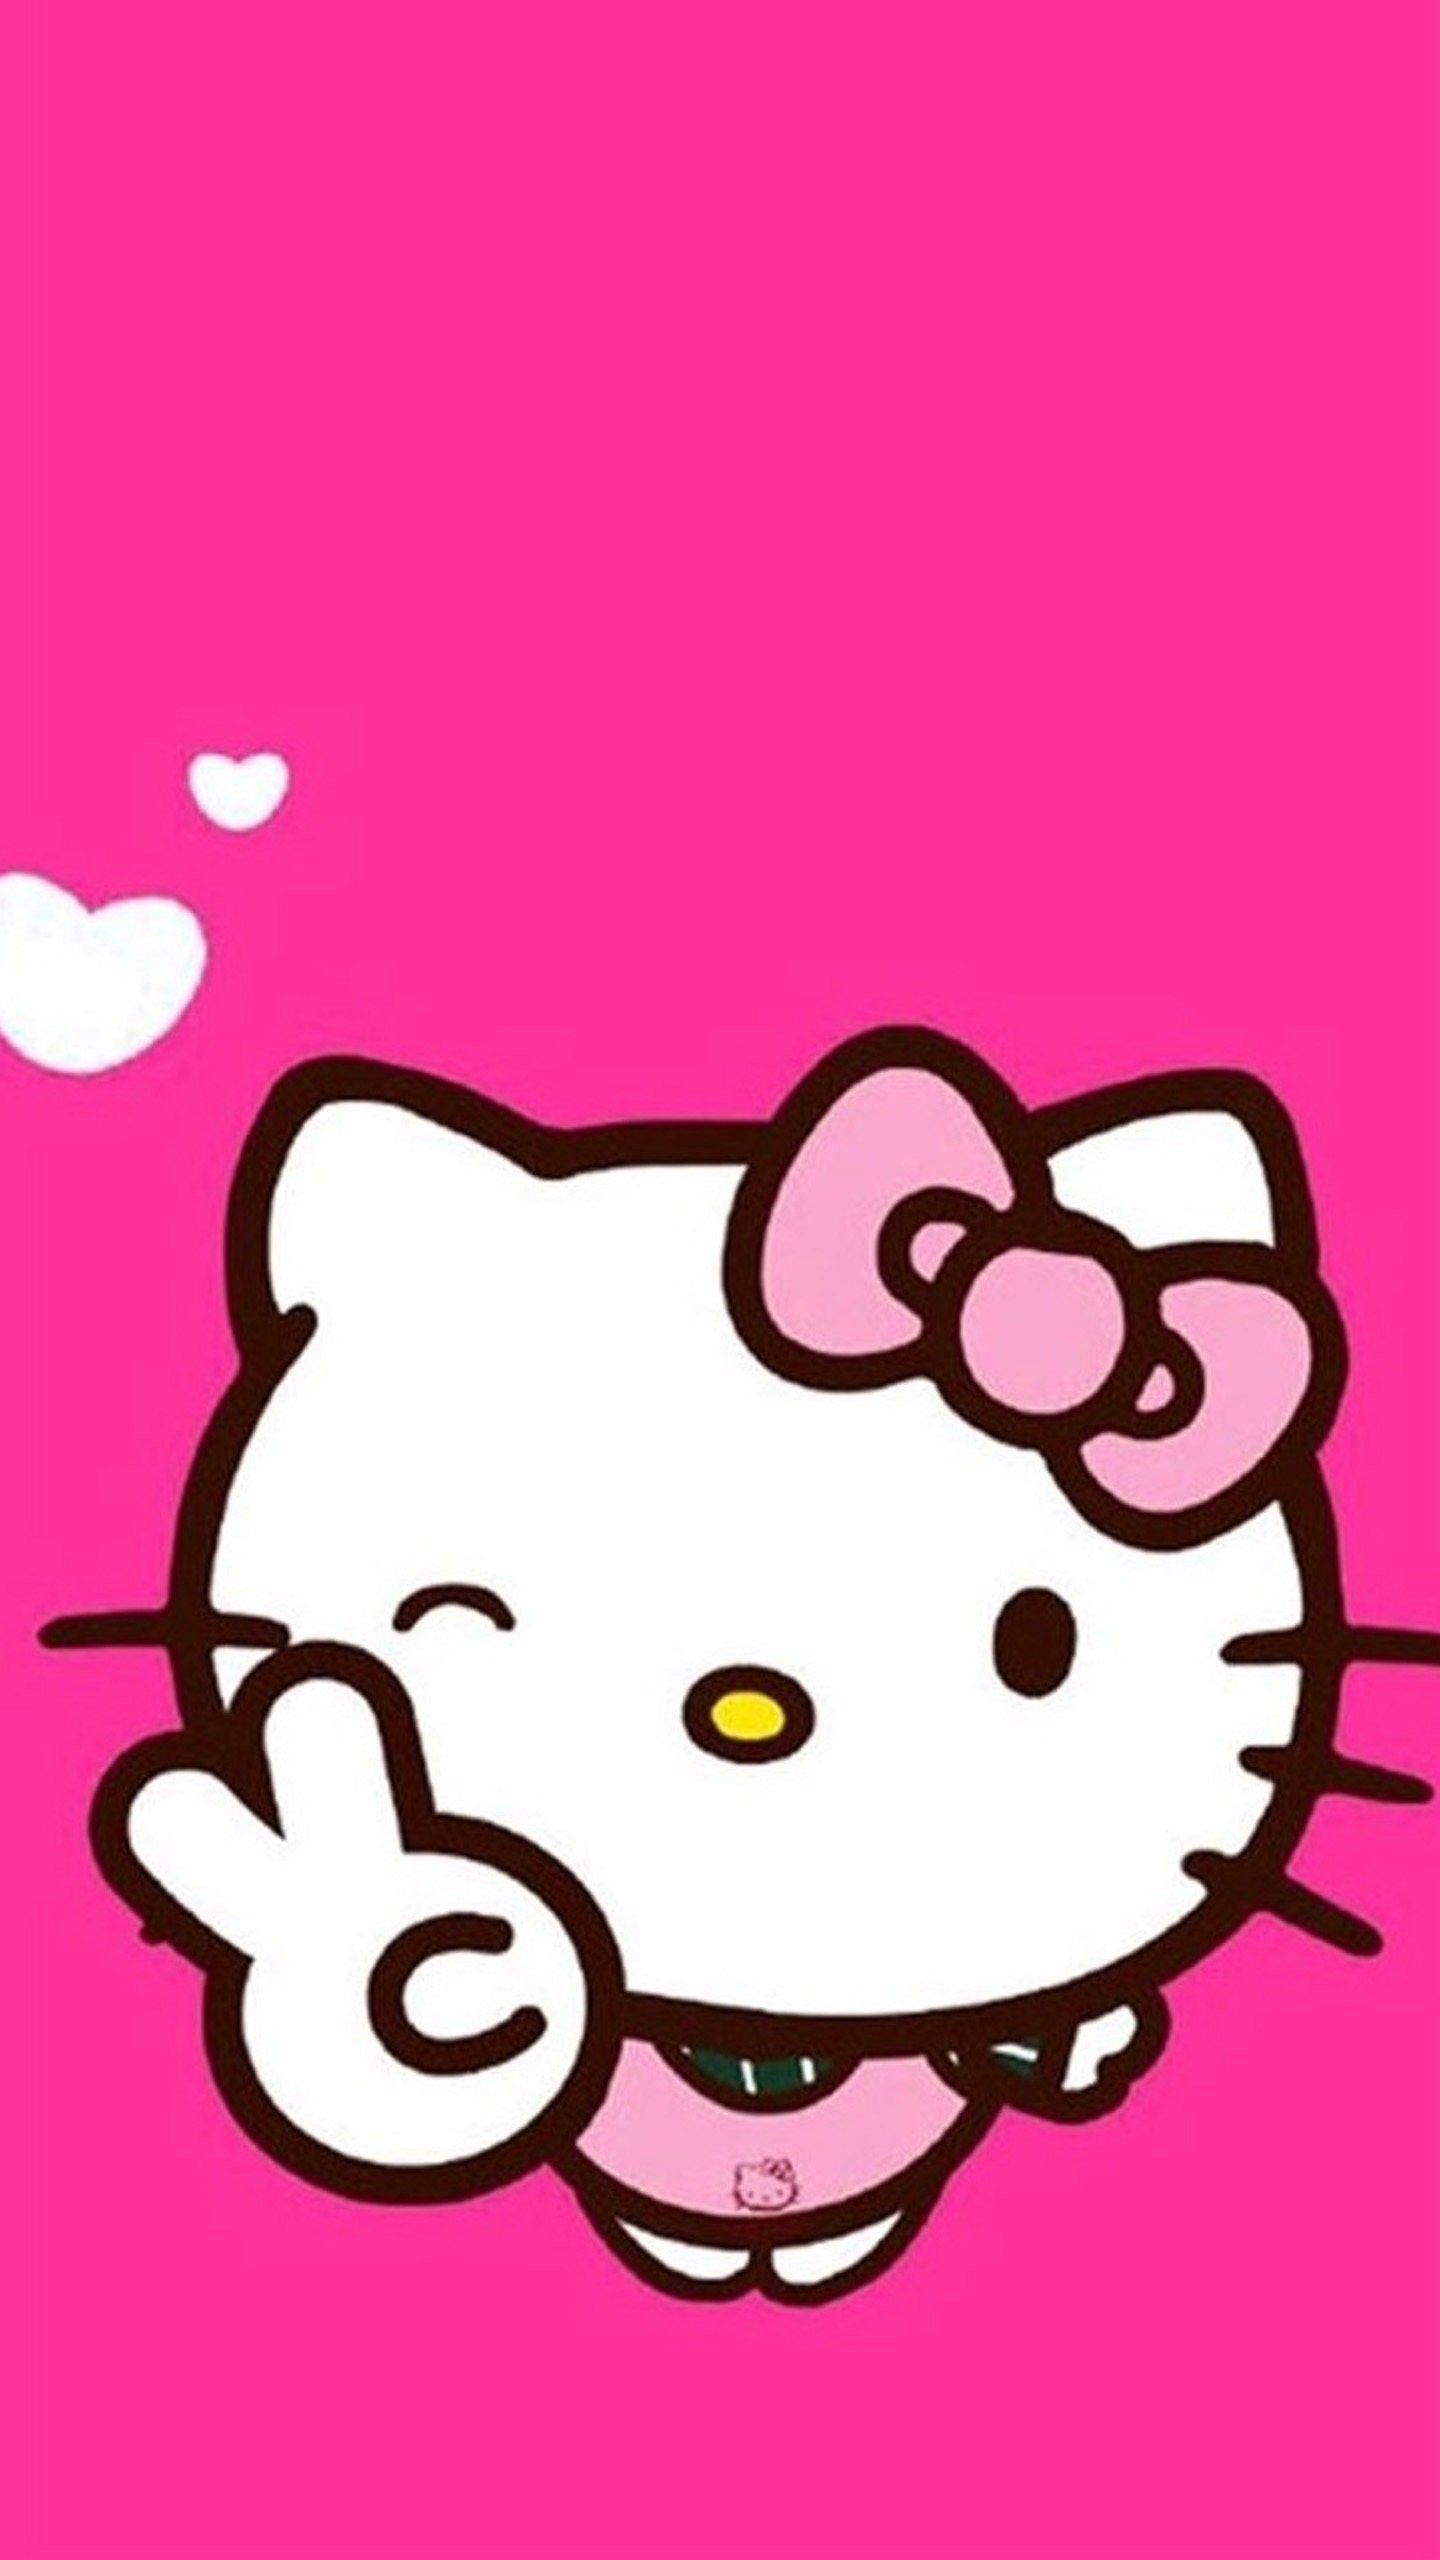 Girly Hello  Kitty  Wallpapers Top Free  Girly Hello  Kitty  